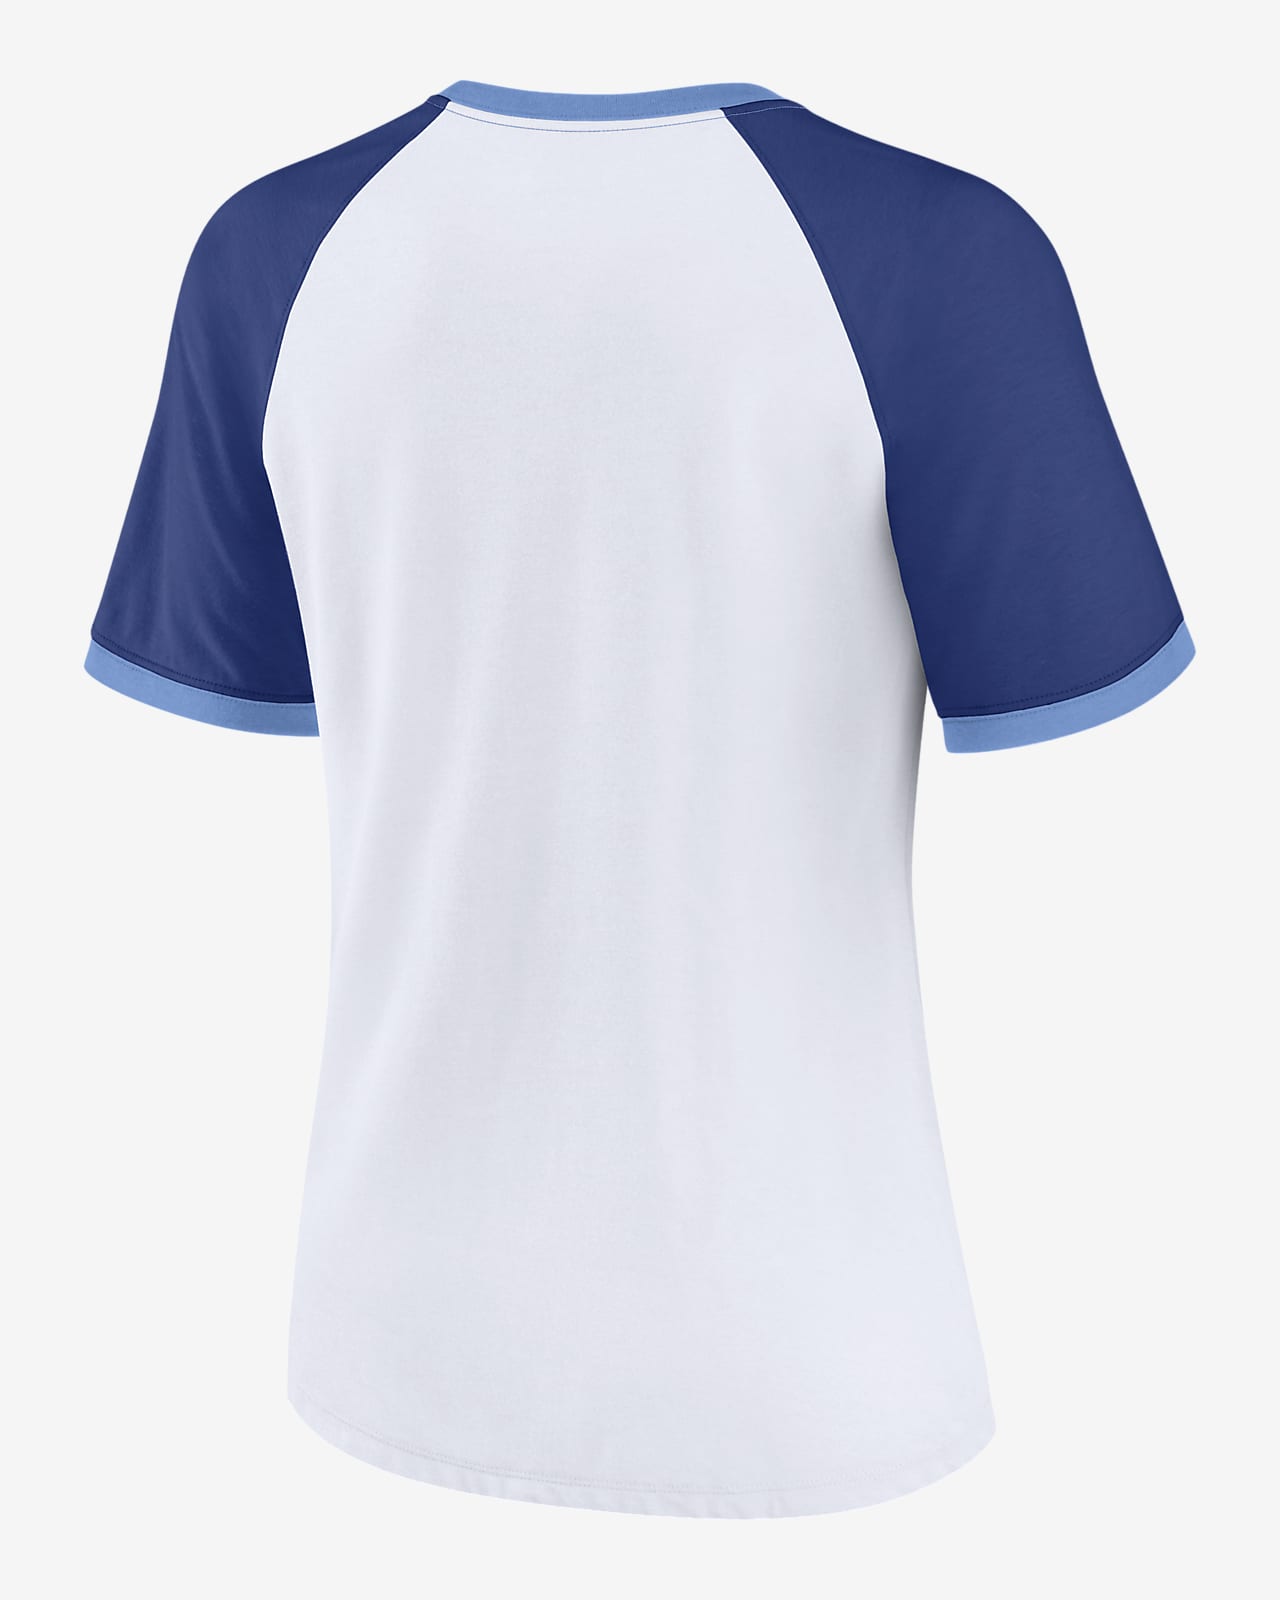 Nike Rewind Color Remix (MLB Brooklyn Dodgers) Women's T-Shirt